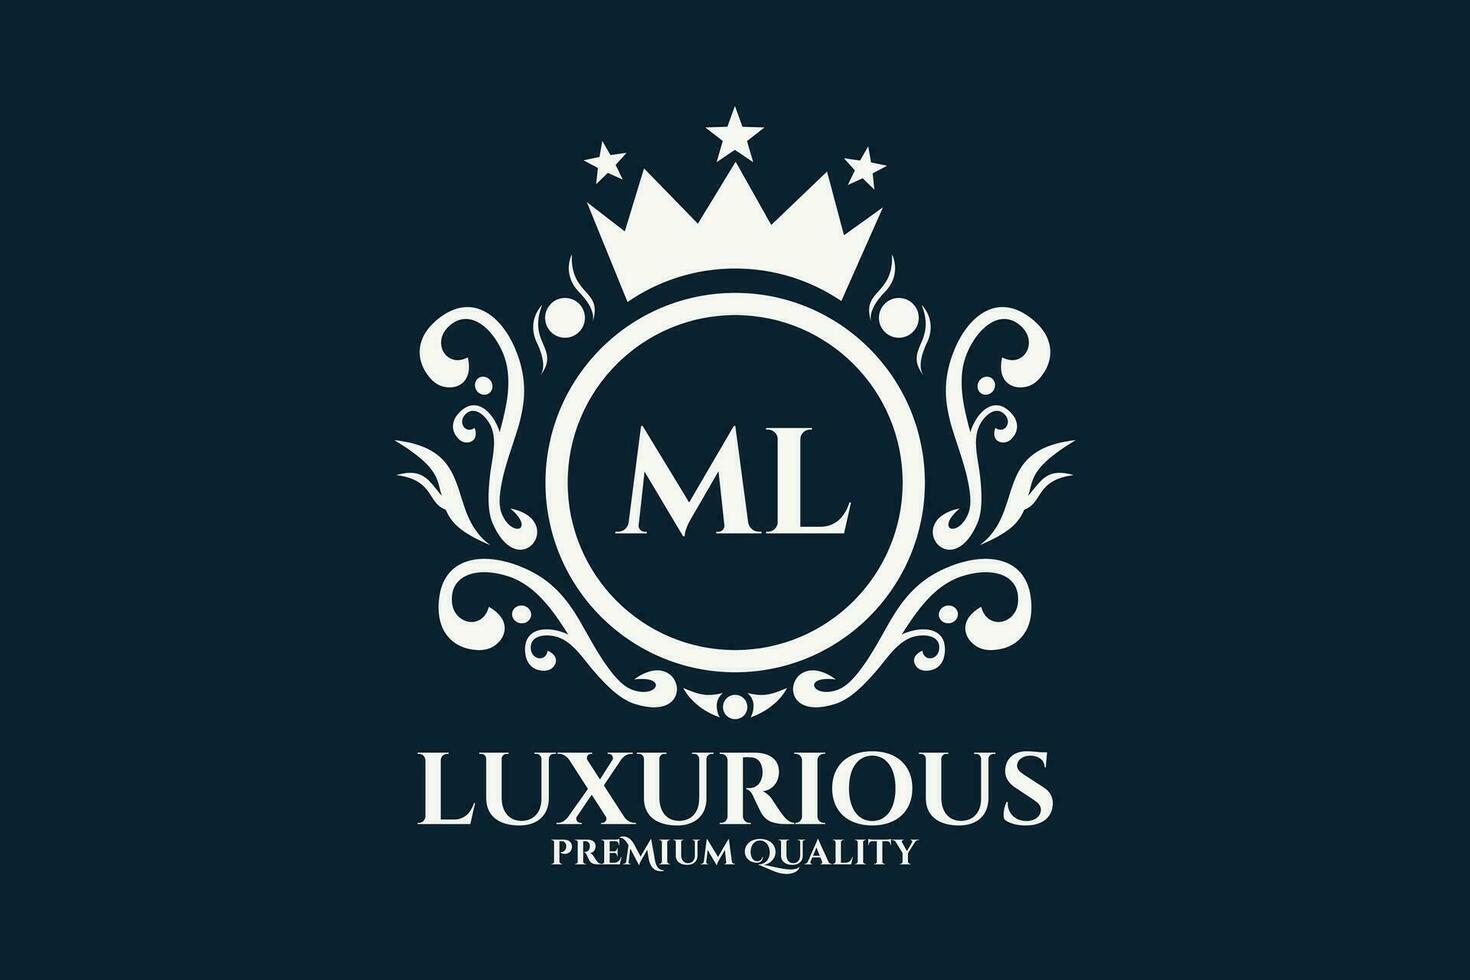 Initial  Letter ML Royal Luxury Logo template in vector art for luxurious branding  vector illustration.